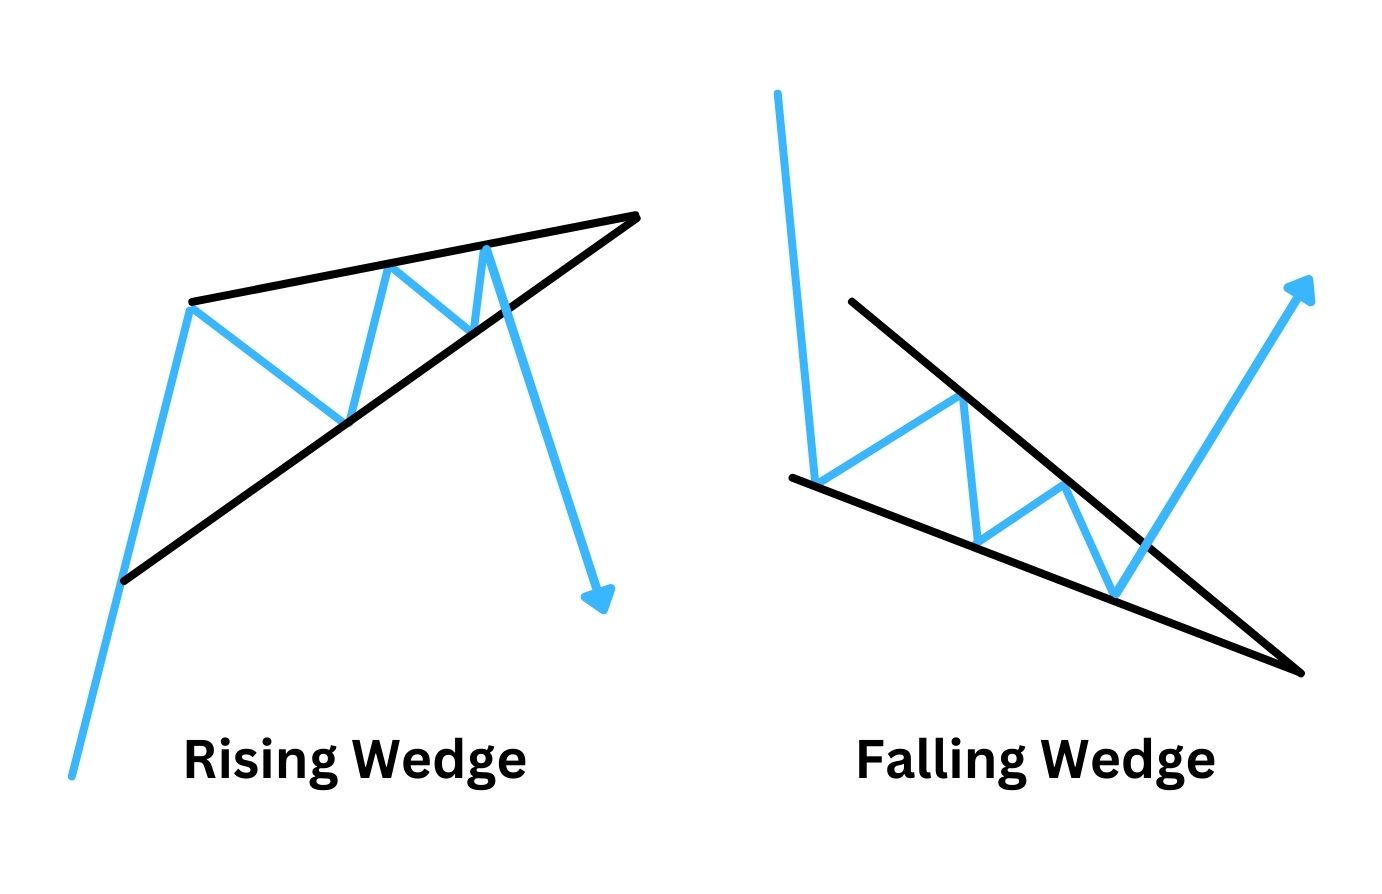 Illustration of rising wedge vs falling wedge pattern.